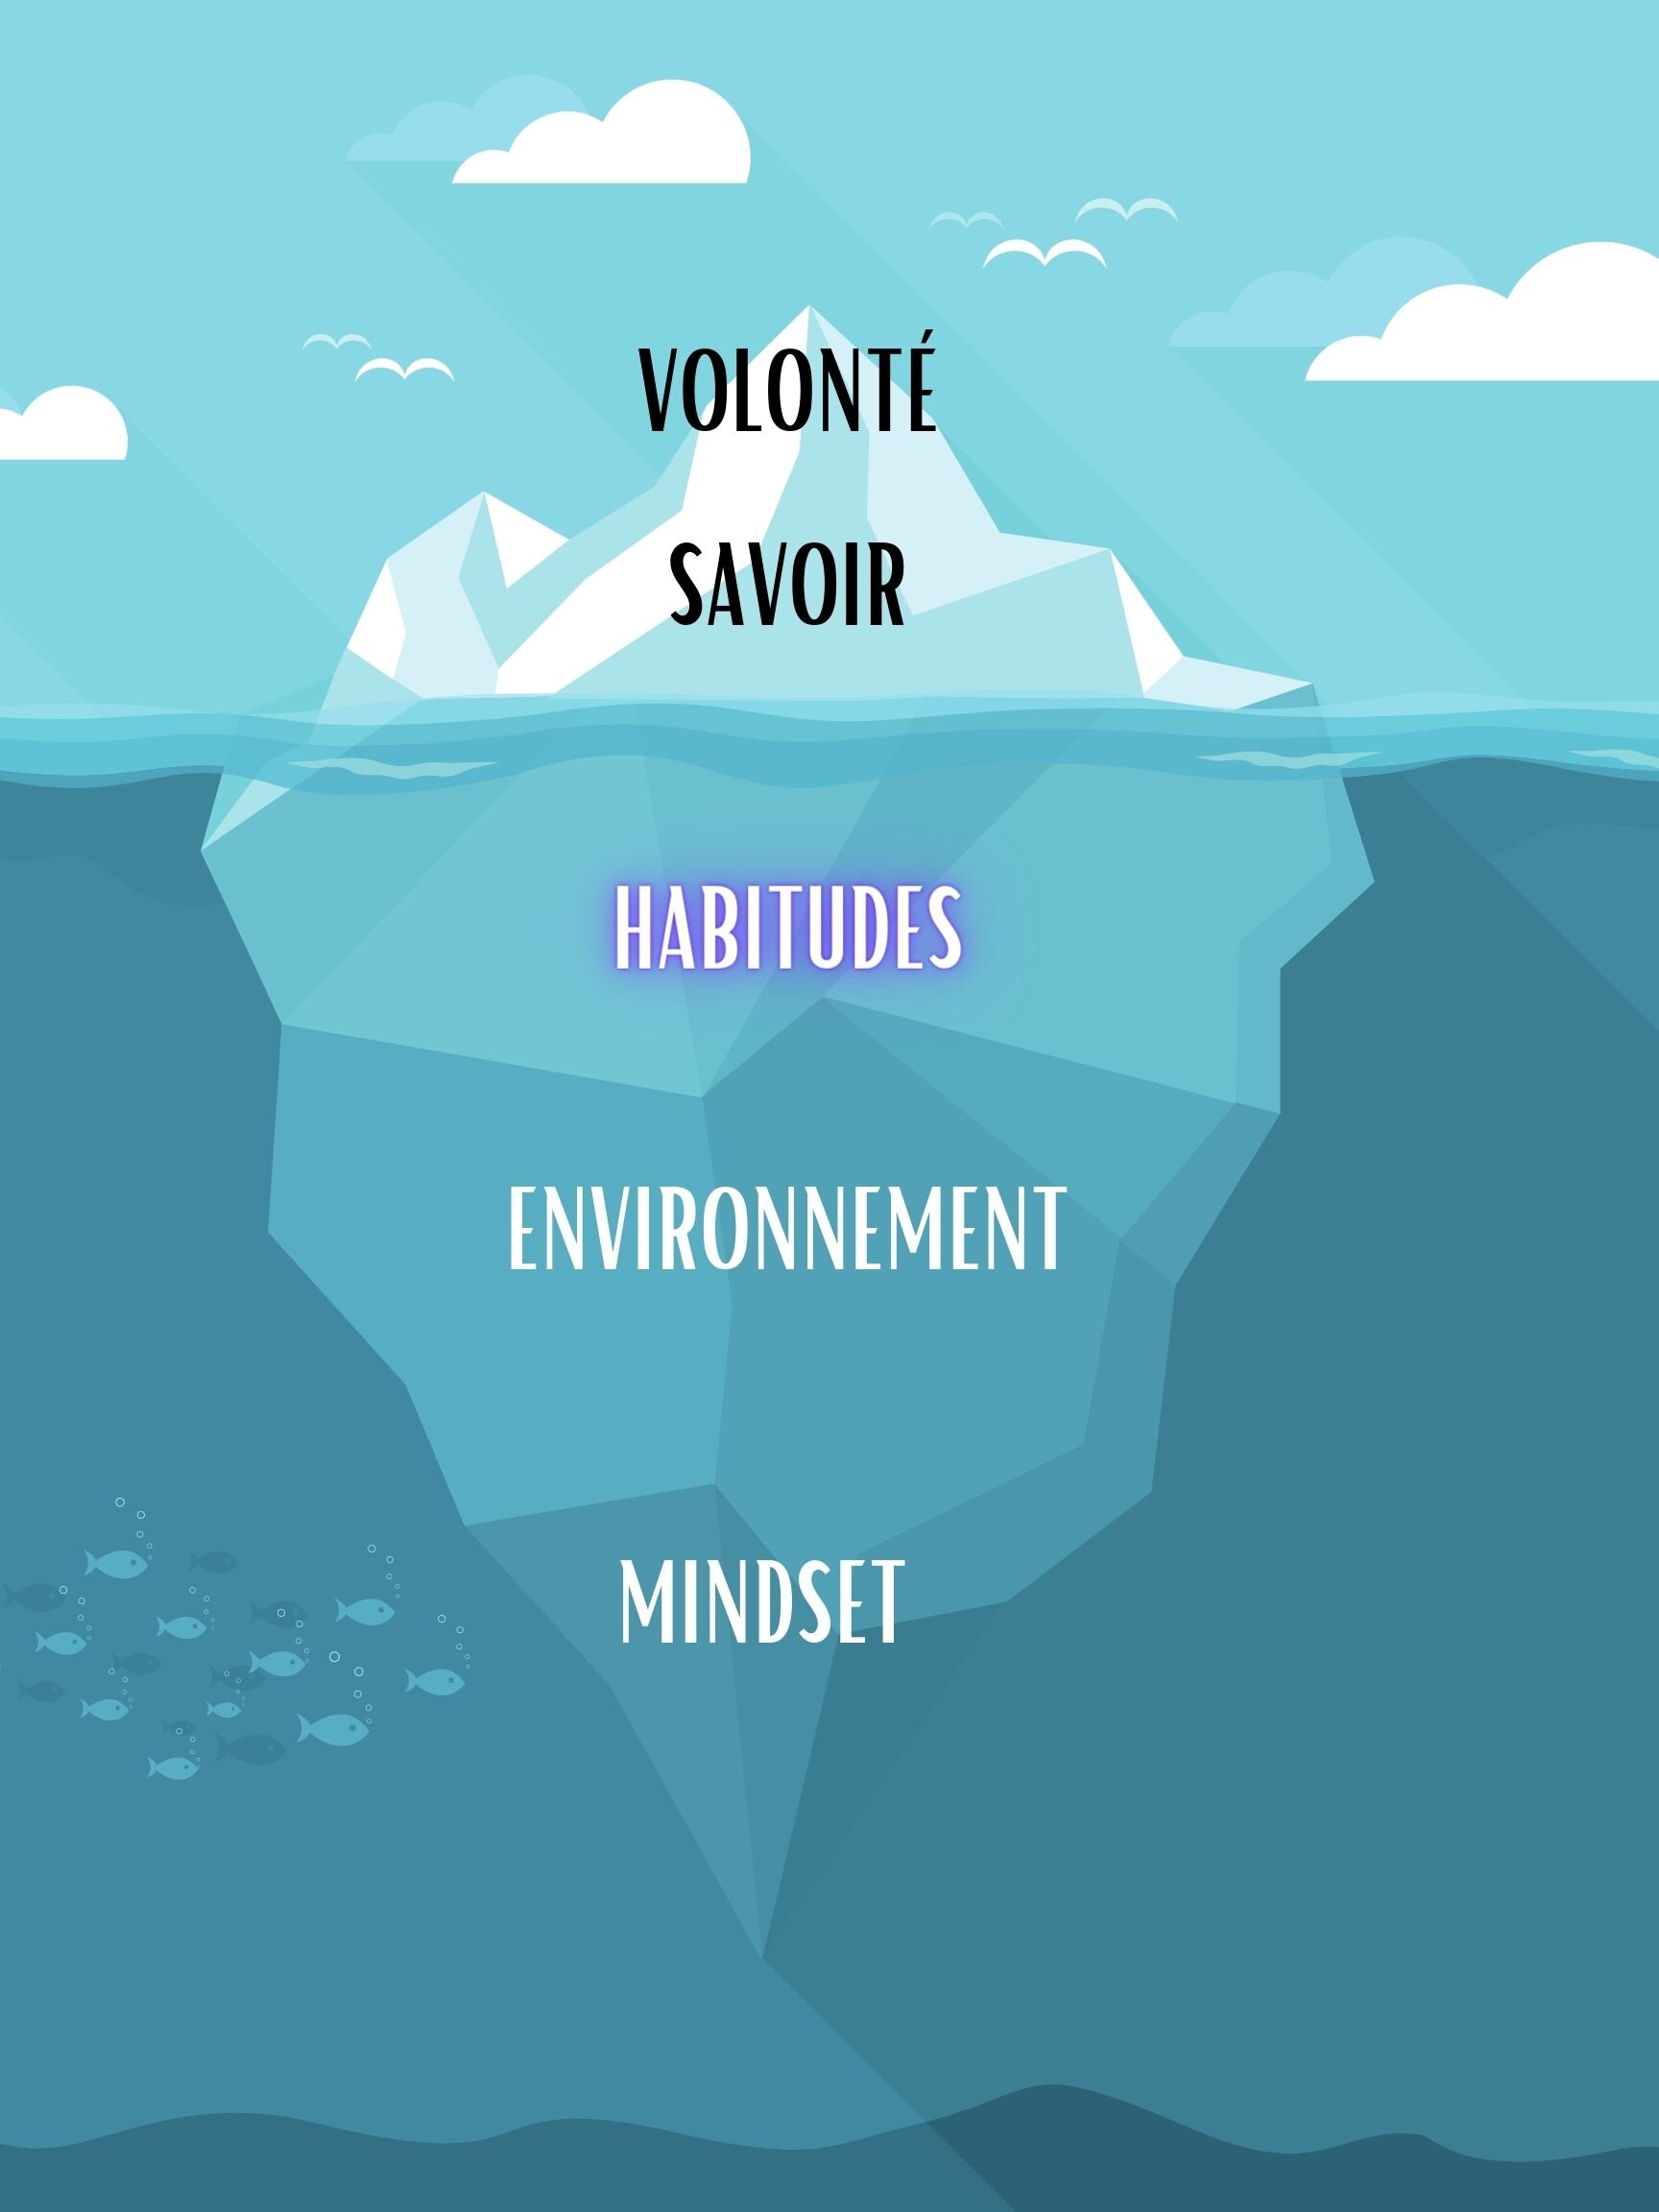 Iceberg du succès - CFSB - HABITUDES.jpg